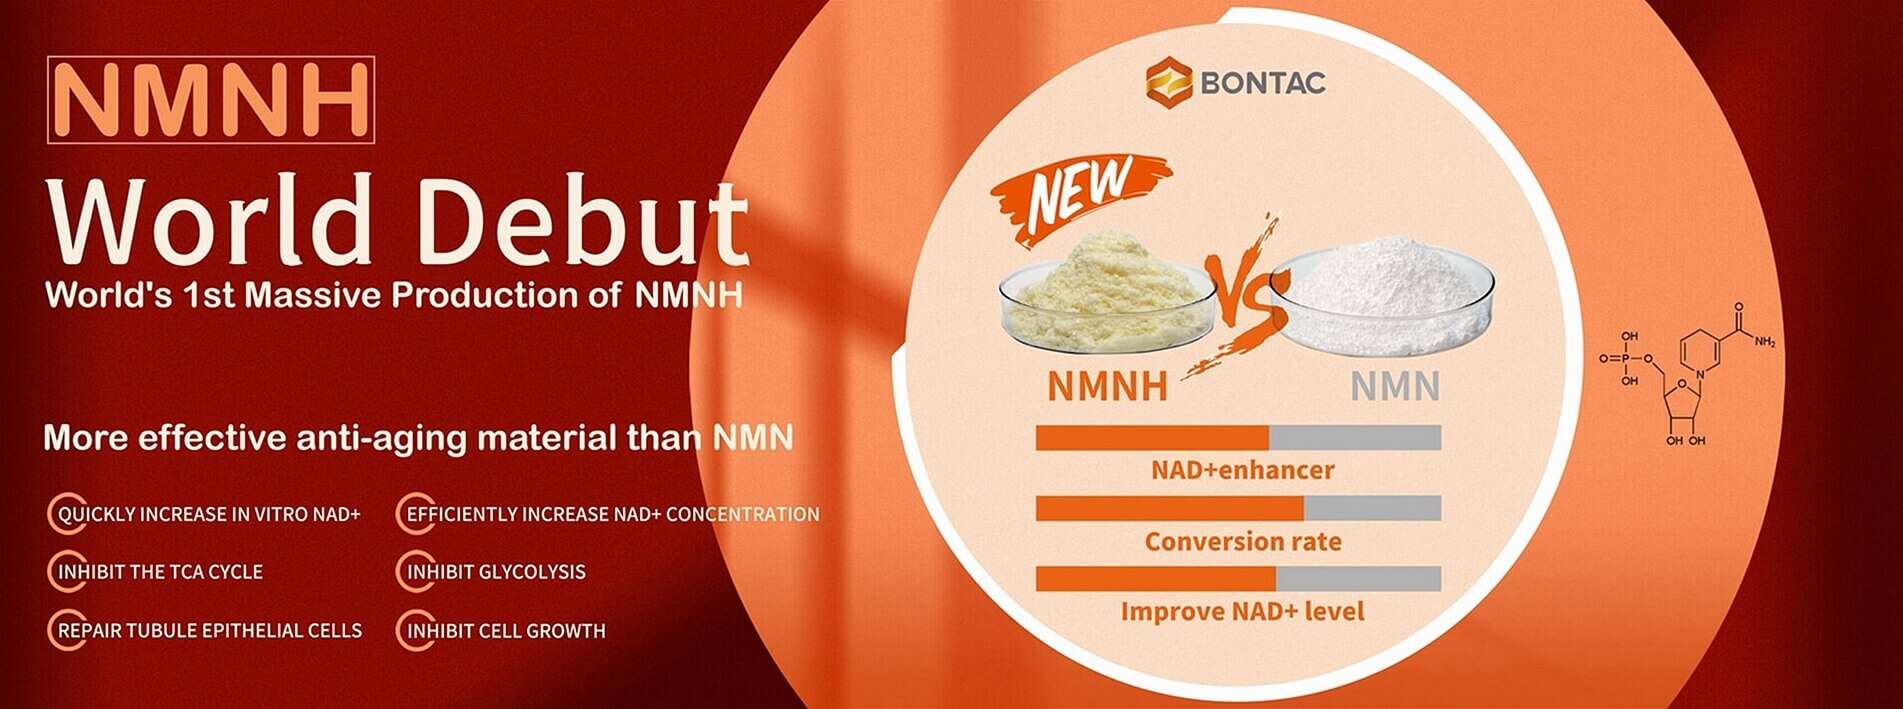 BONTAC NMNH